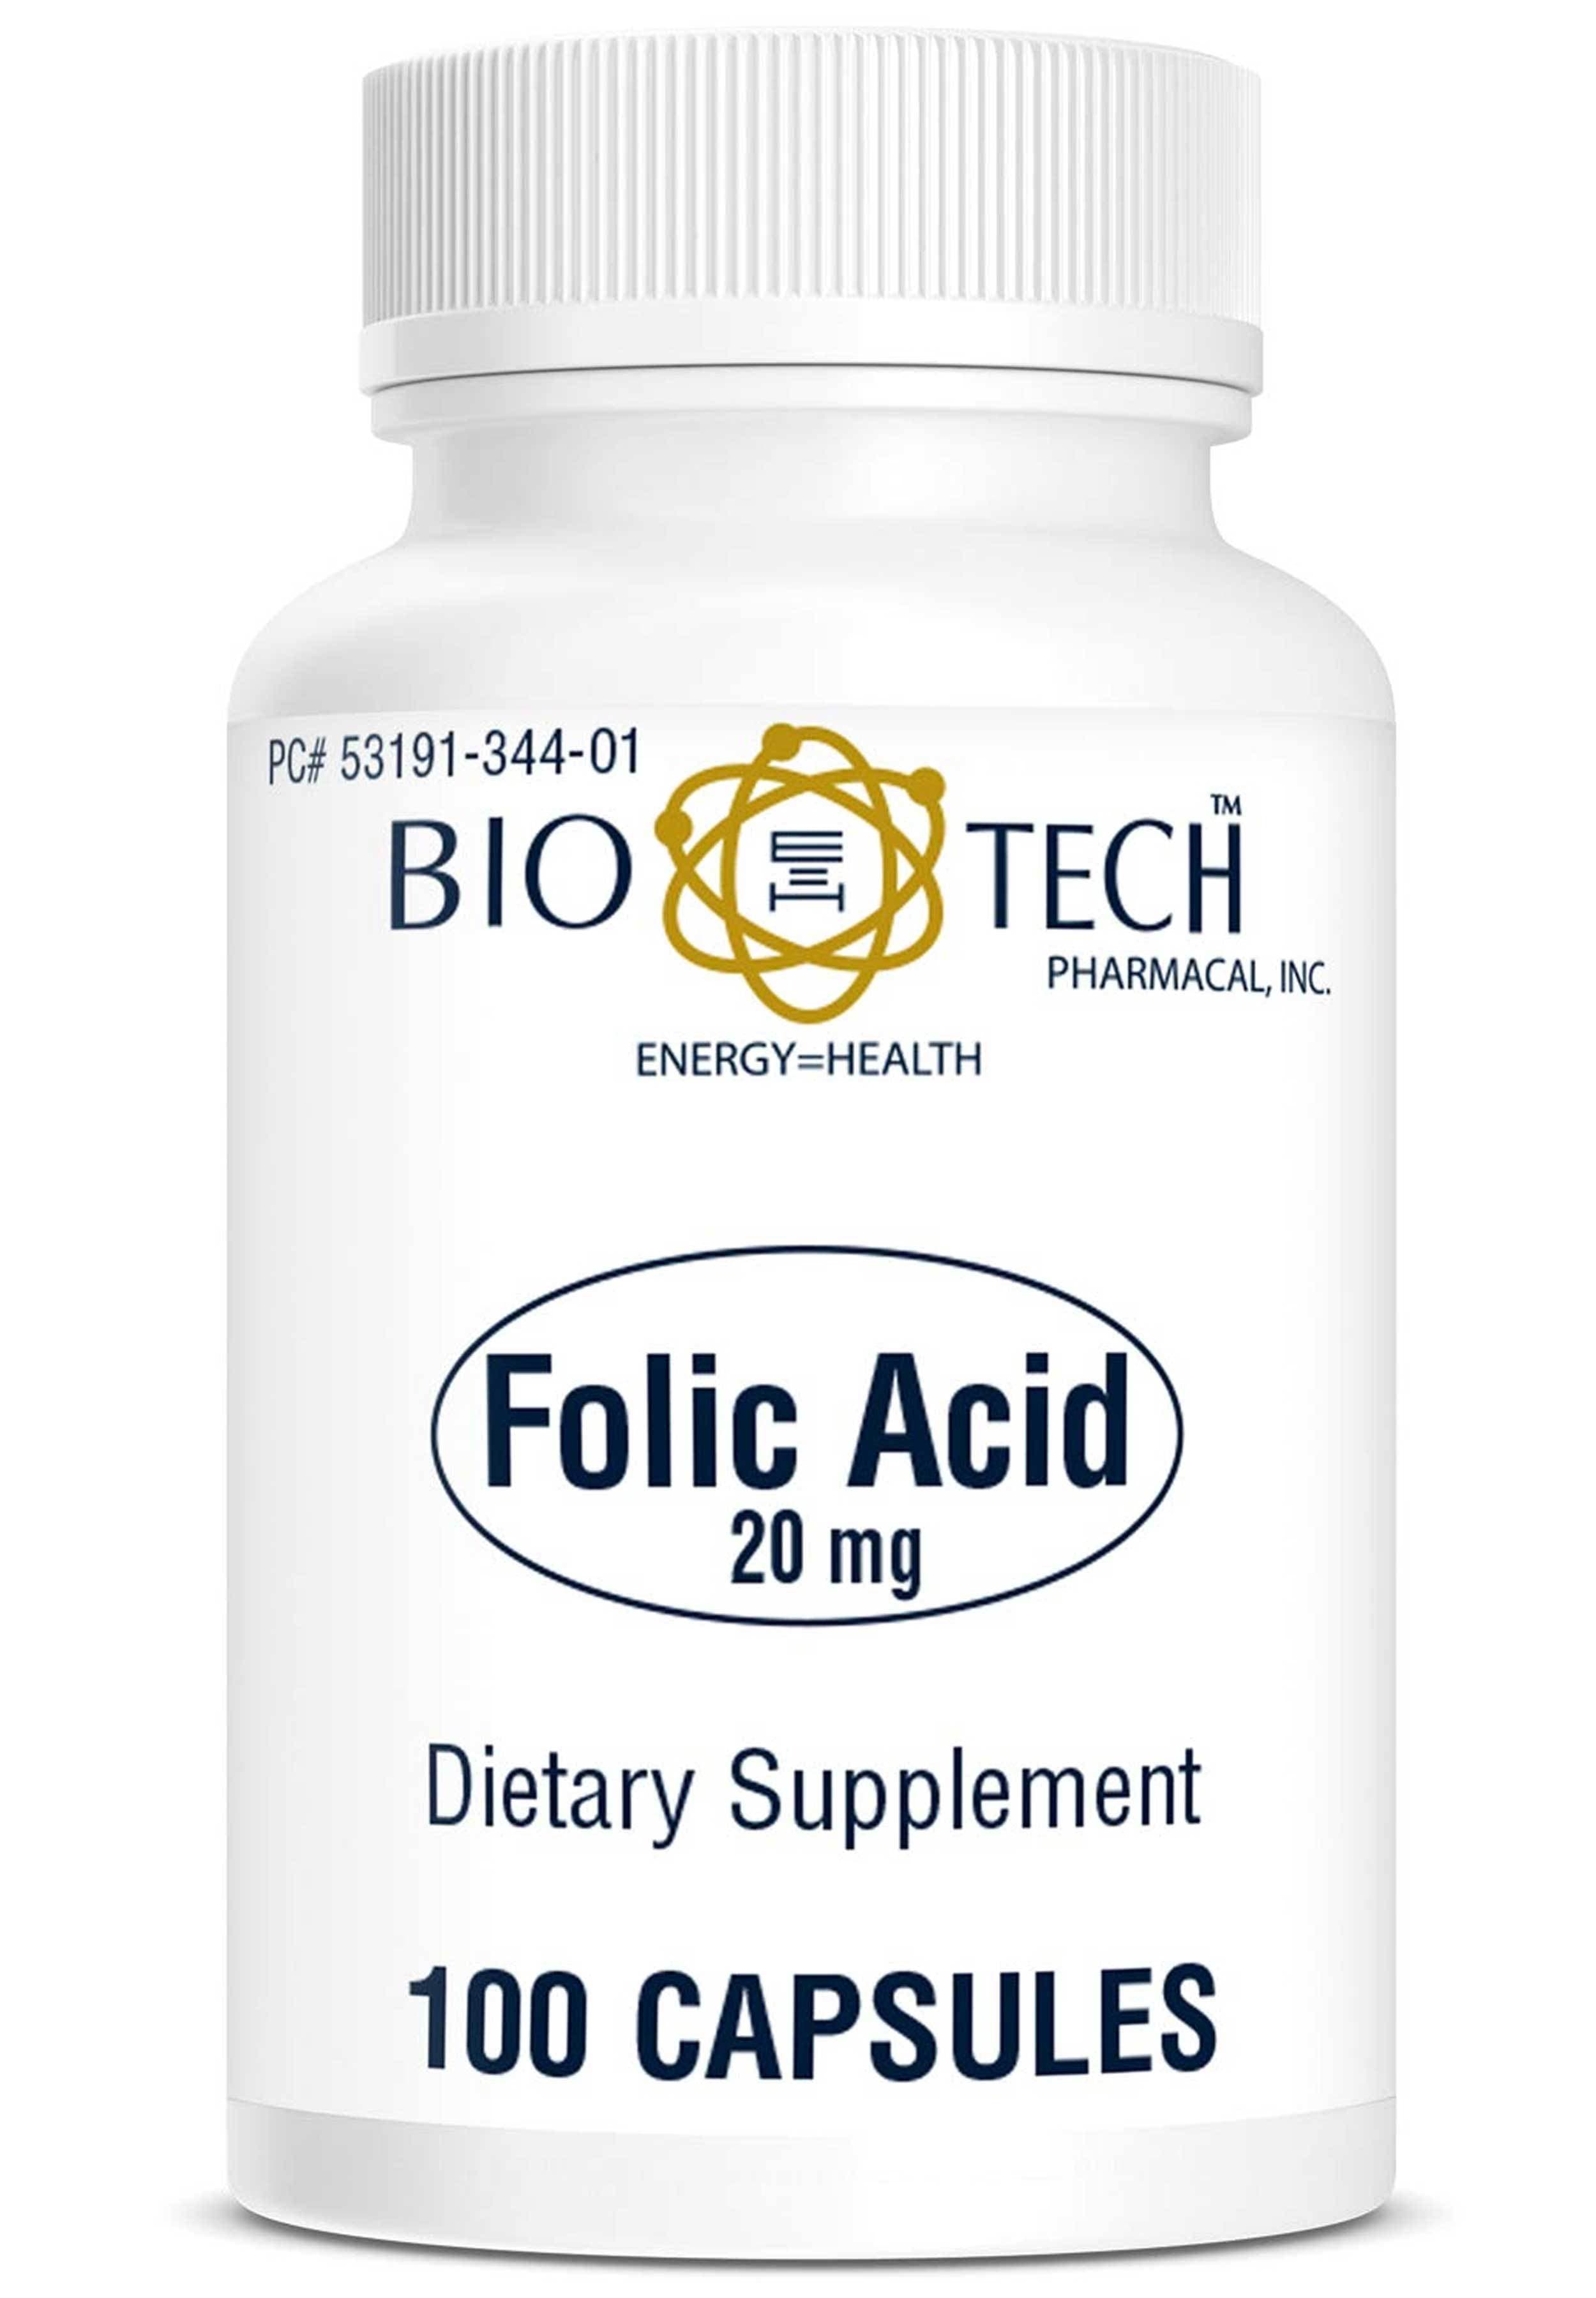 Bio-Tech Pharmacal Folic Acid 20 mg